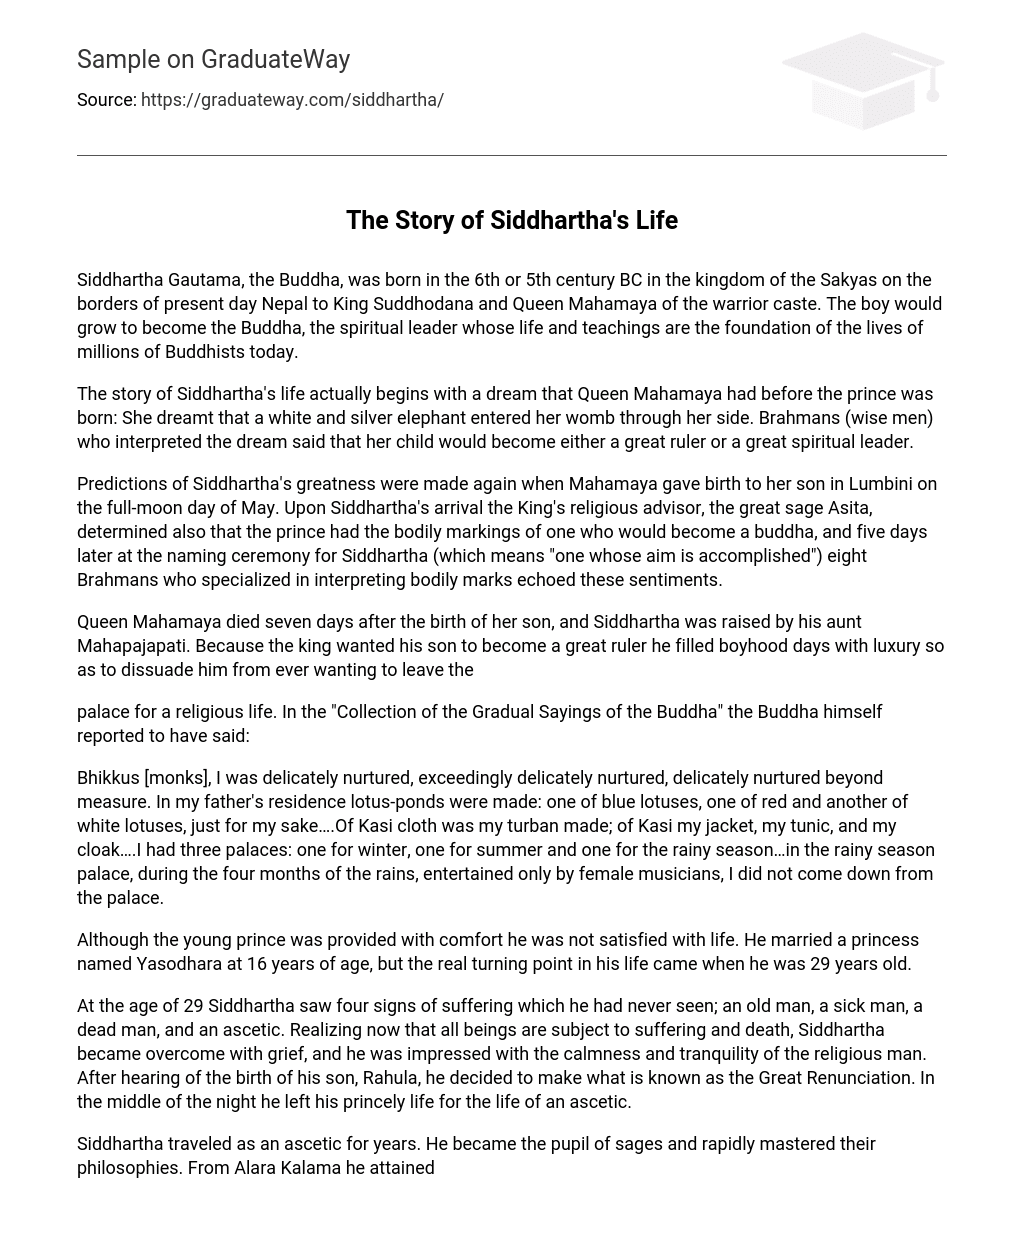 The Story of Siddhartha’s Life